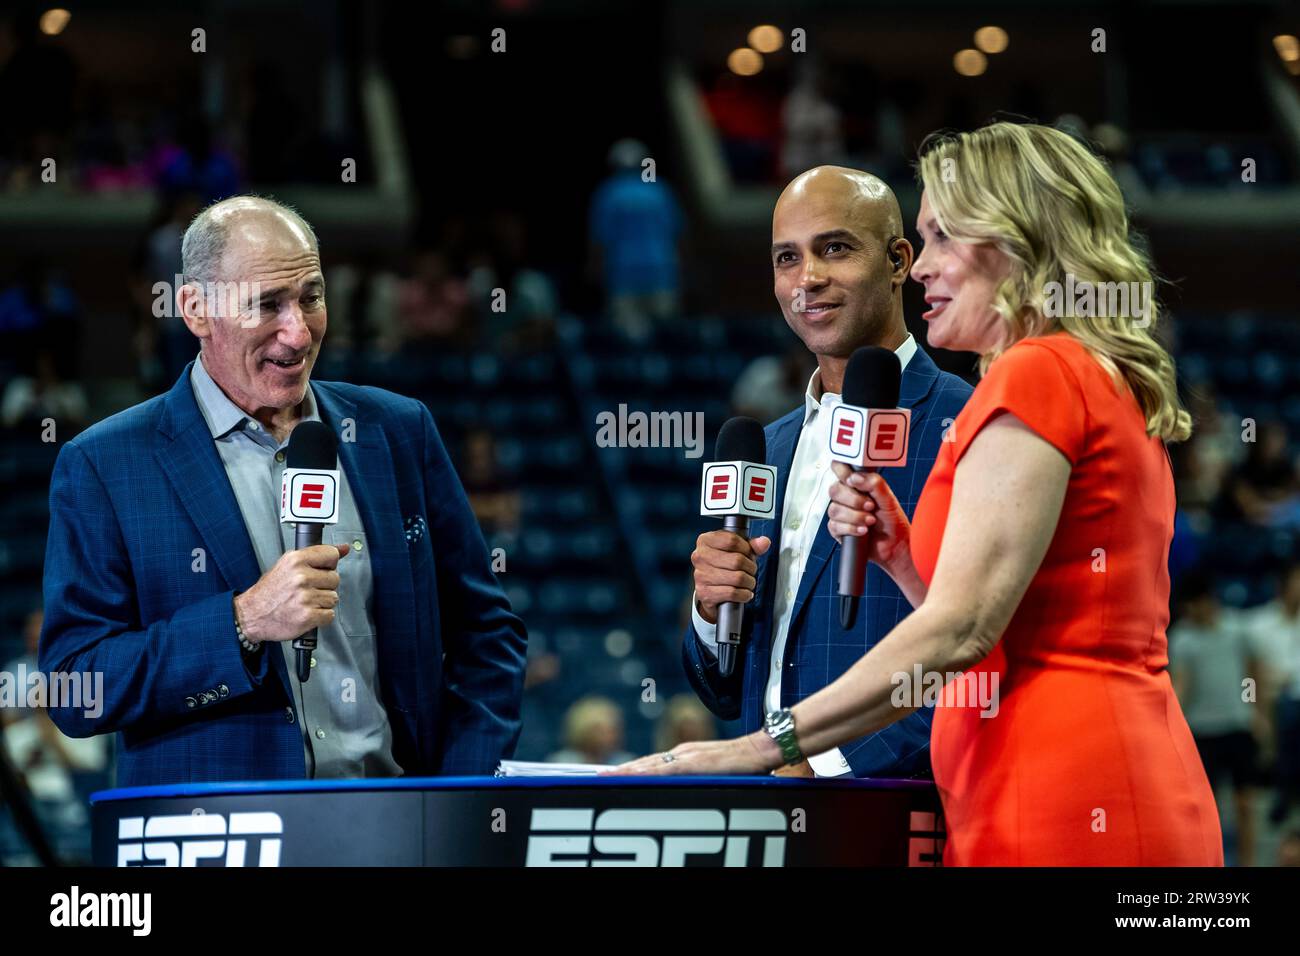 Brad Gilbert, James Blake, and Rennae Stubbs, ESPN tennis commentators